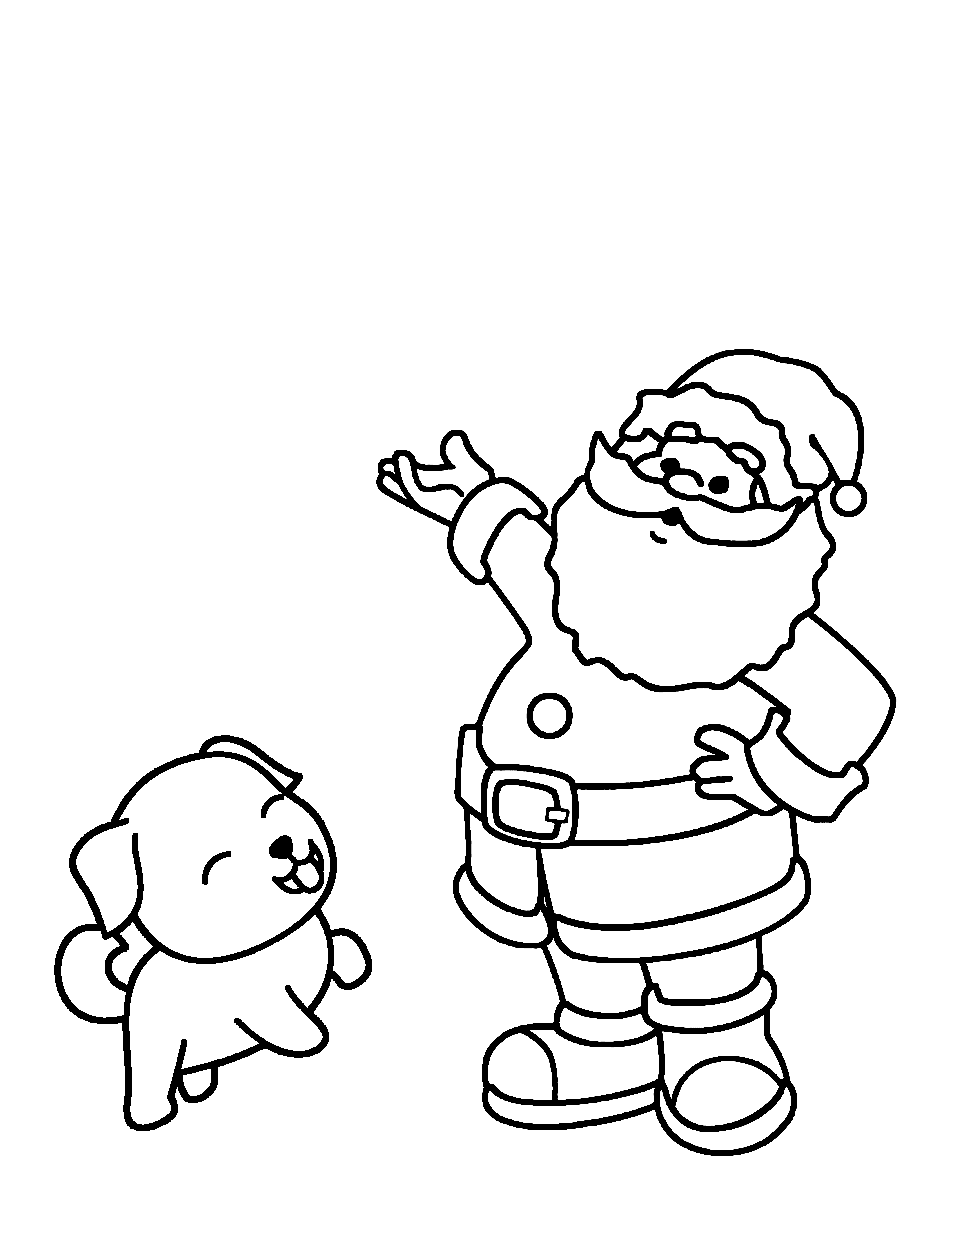 Santa and a Playful Dog Coloring Page - Santa playing with a friendly dog.